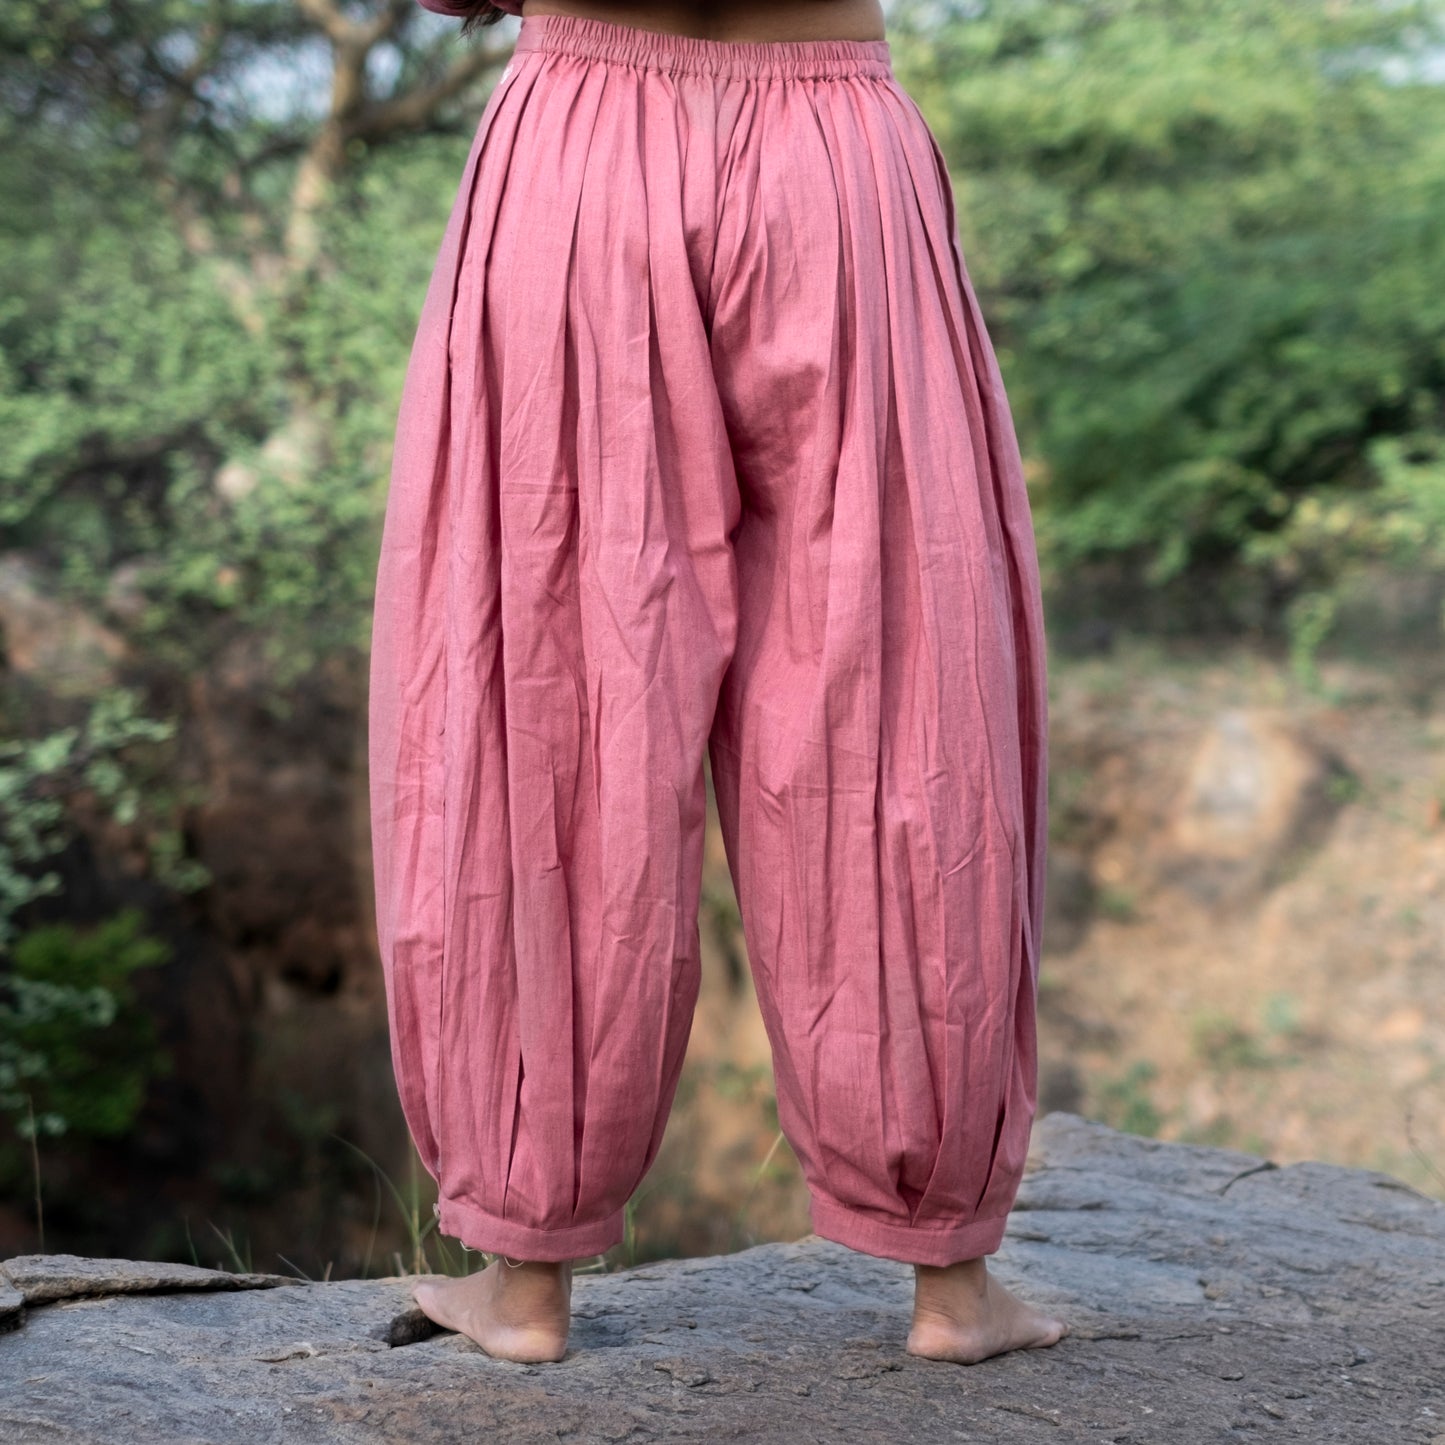 Chakra Yoga Top and Pant Set Pink